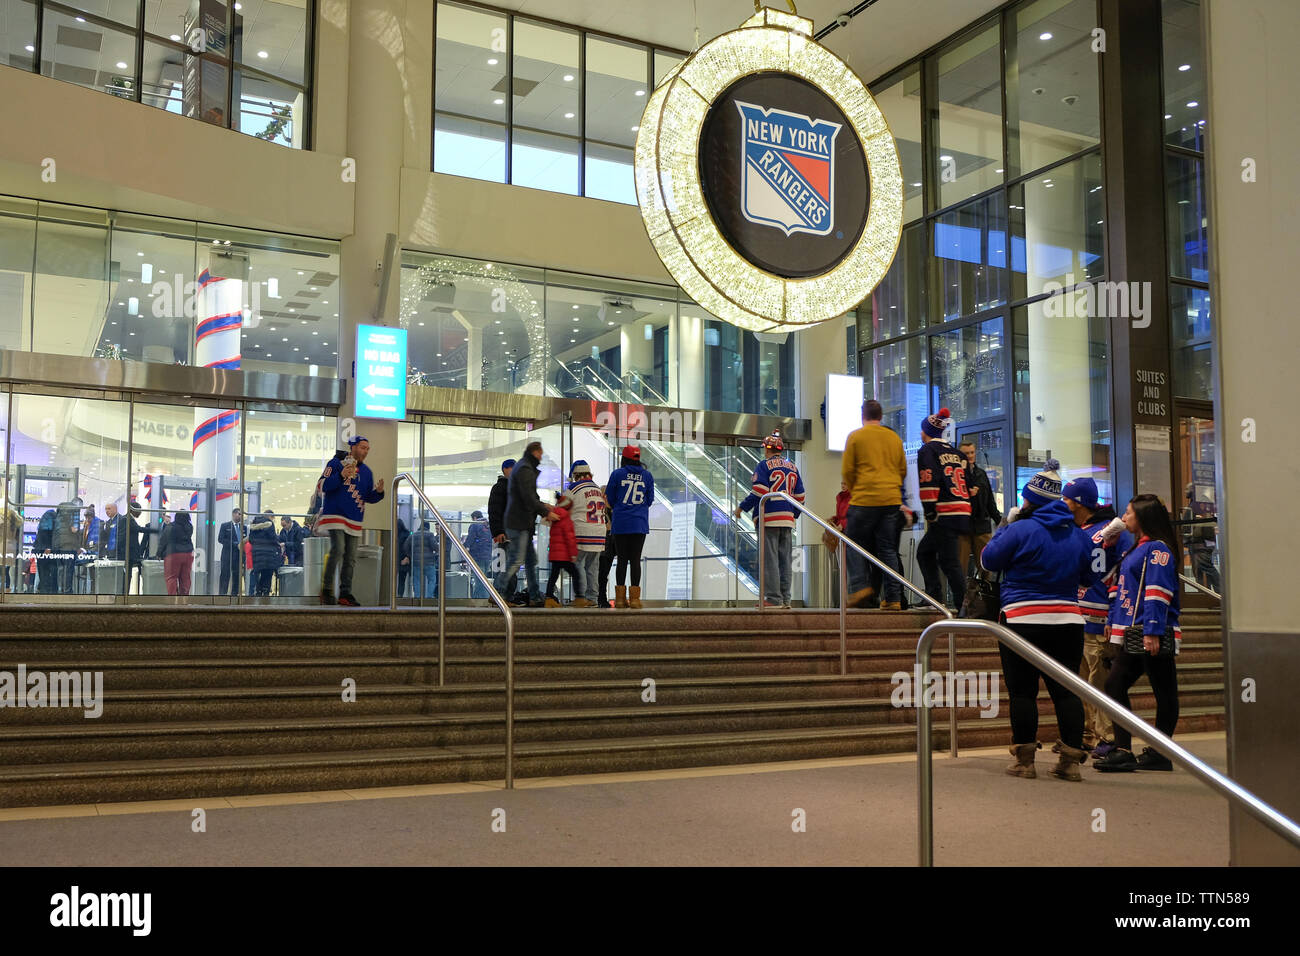 Dezember 2017 - NHL Hockey Fans sammeln im Madison Square Garden für einen NY Rangers Match in New York City, New York, USA Stockfoto